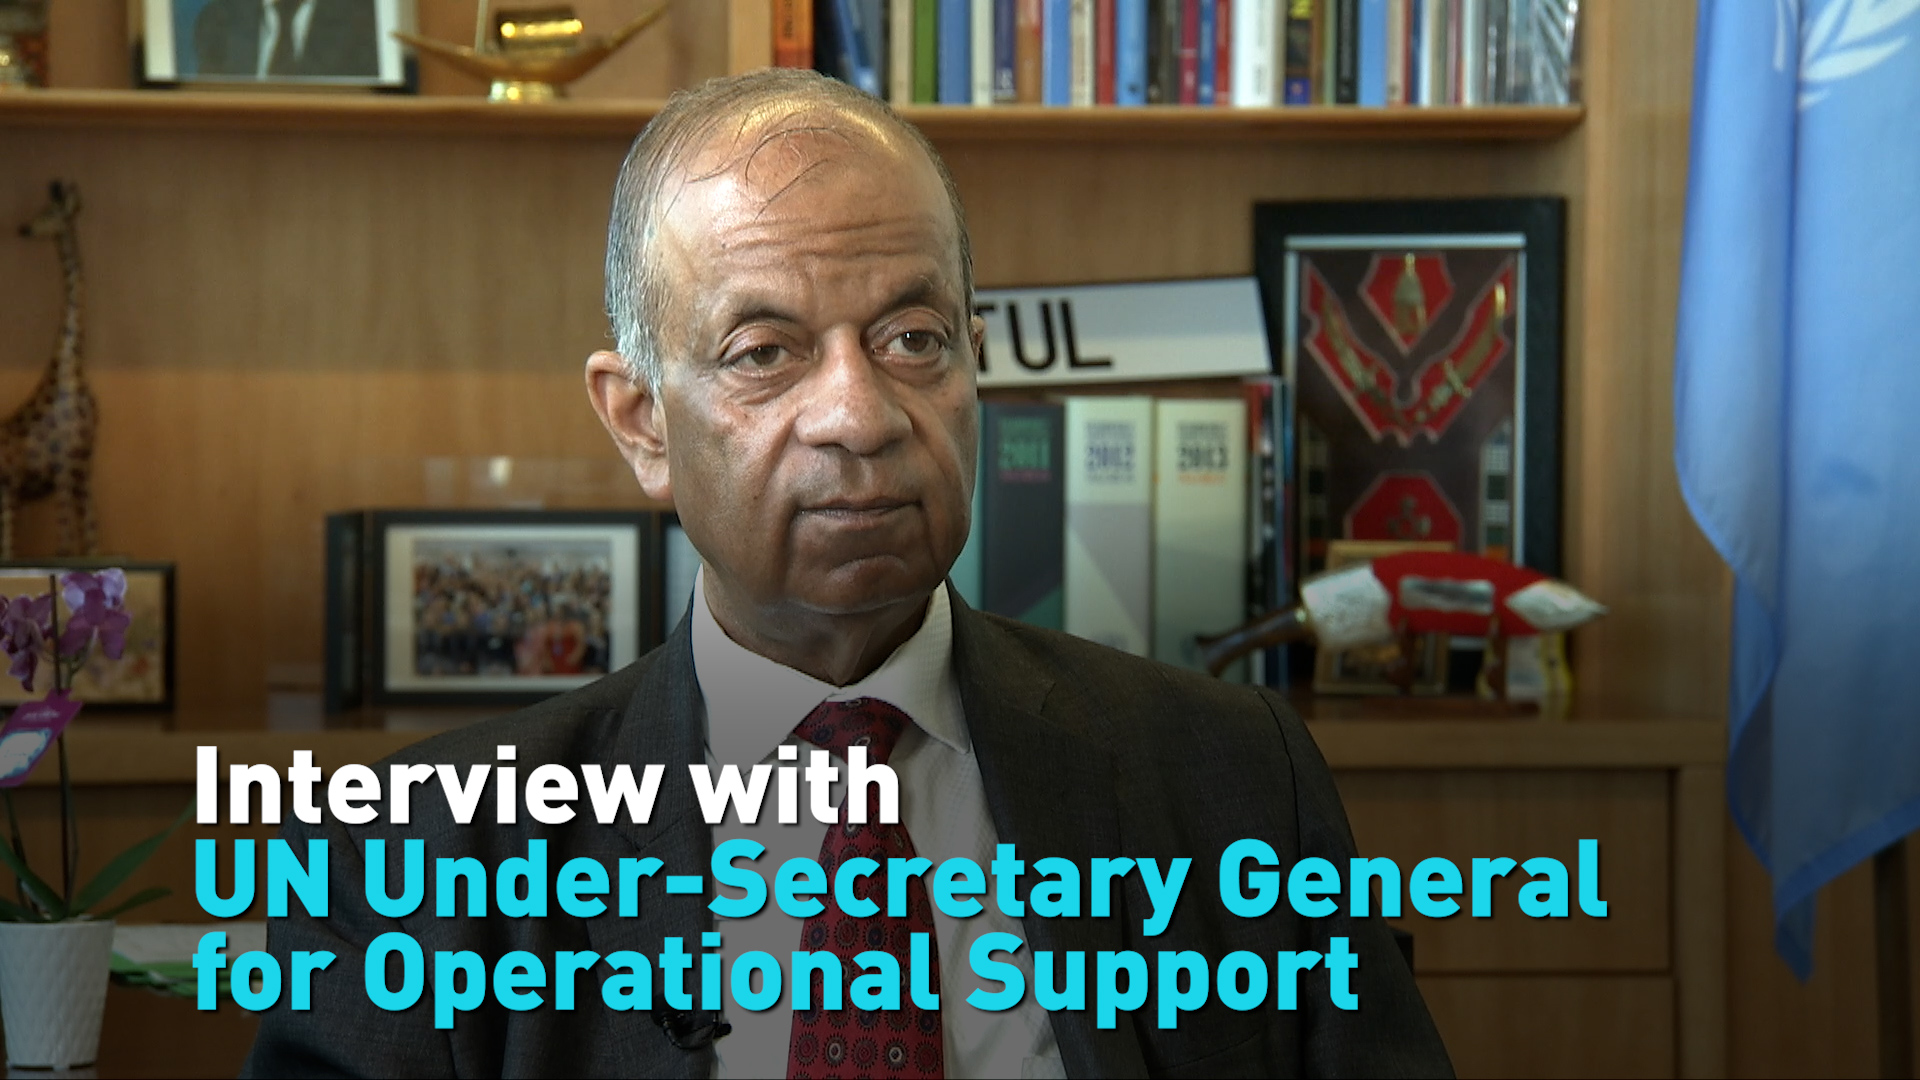 Under Secretary General